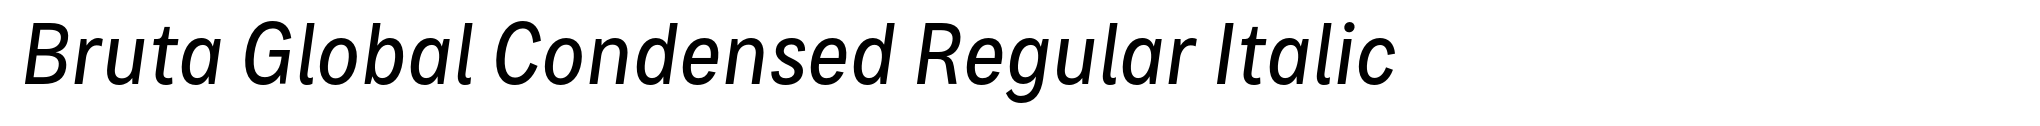 Bruta Global Condensed Regular Italic image